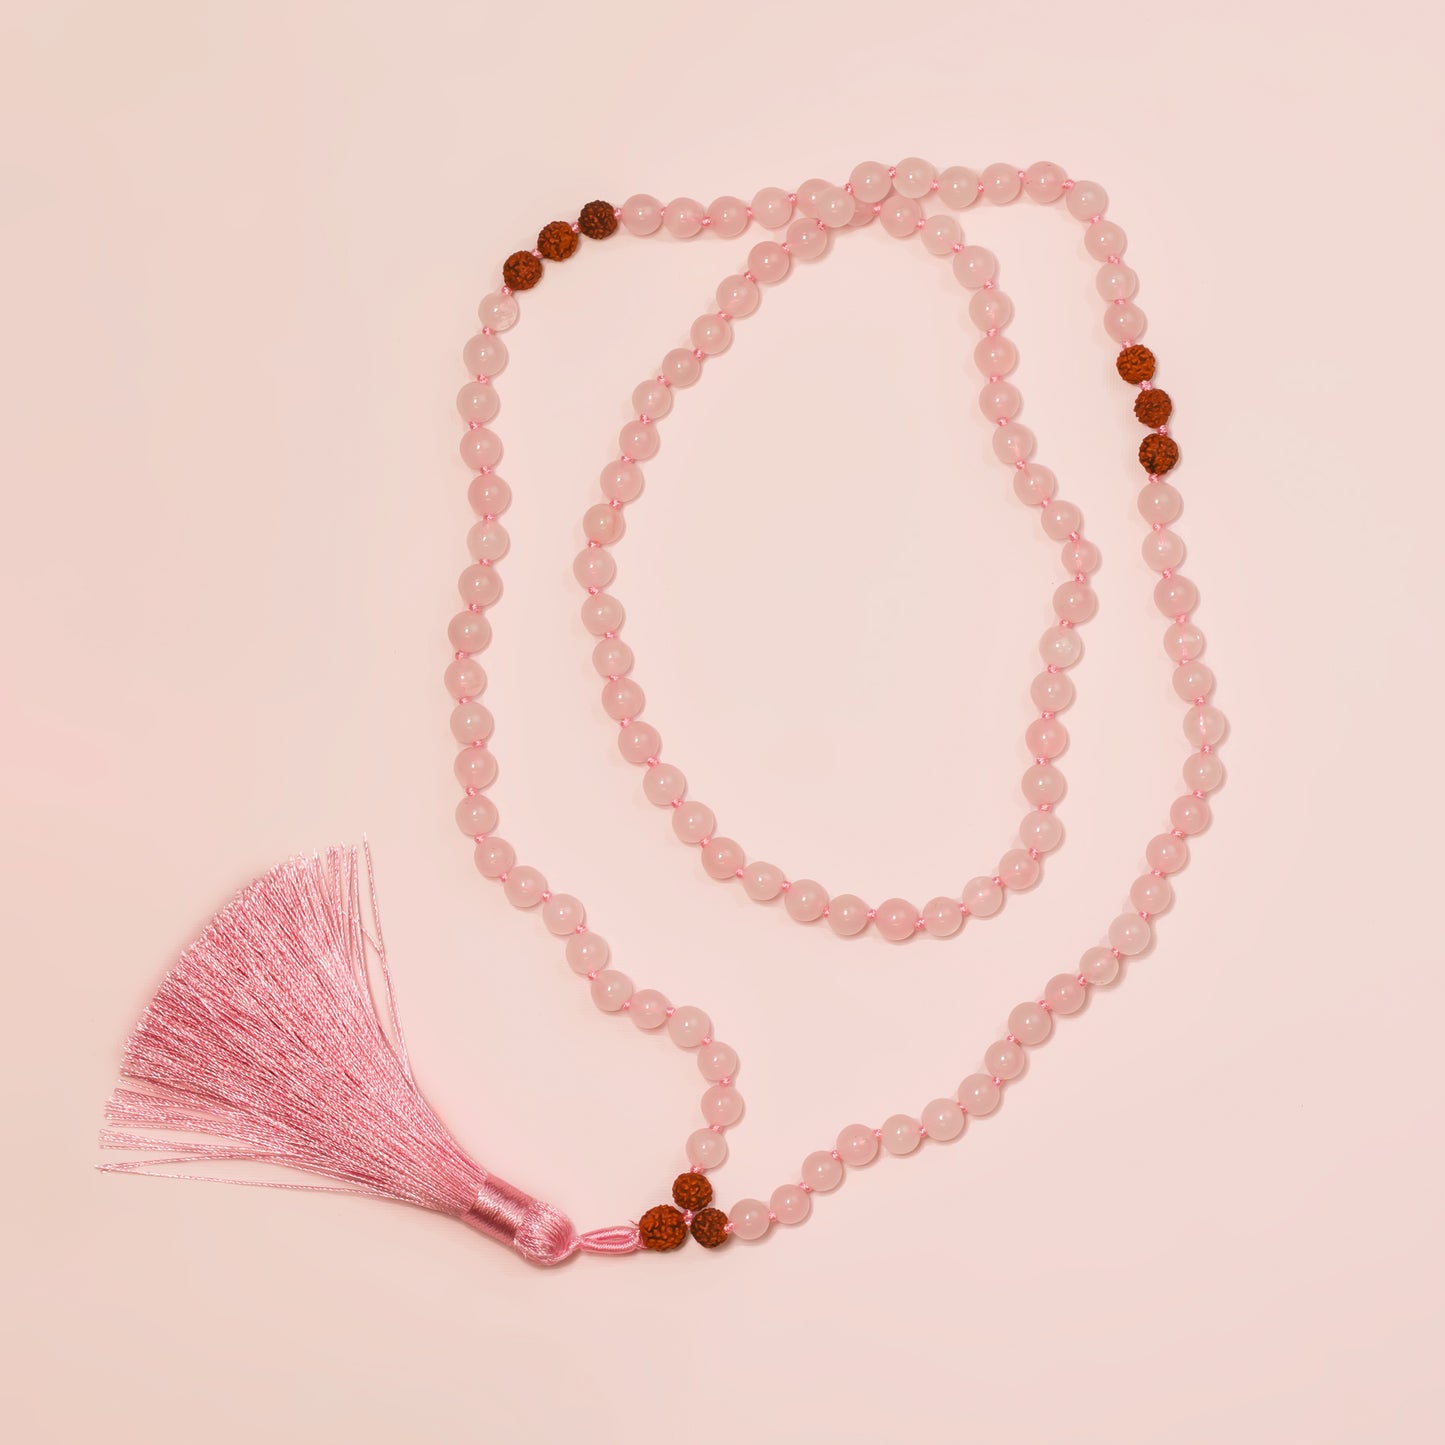 Natural rose quartz mala necklace with silk tassel